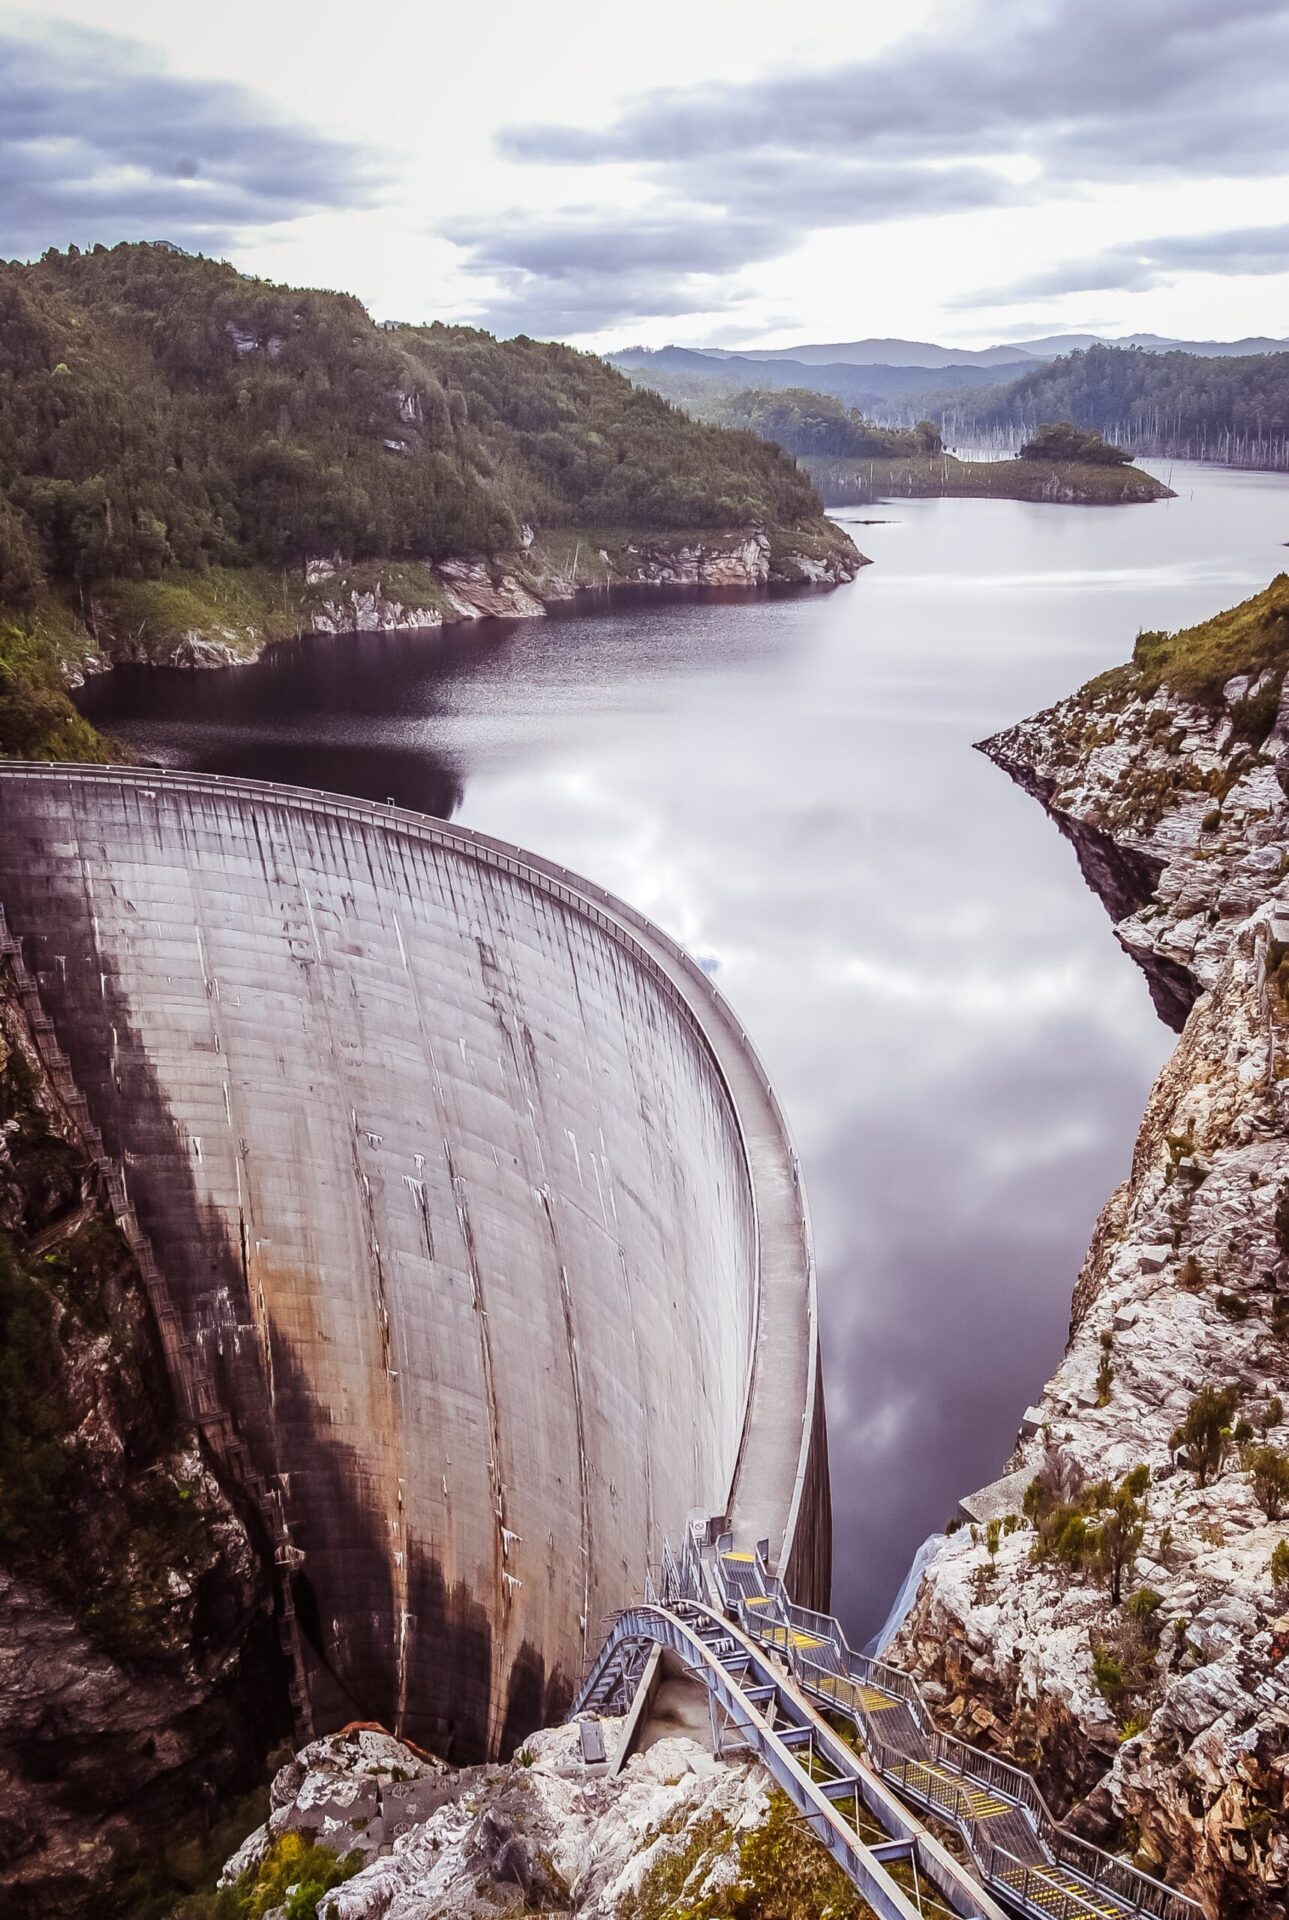 a large dam holding back a reservoir